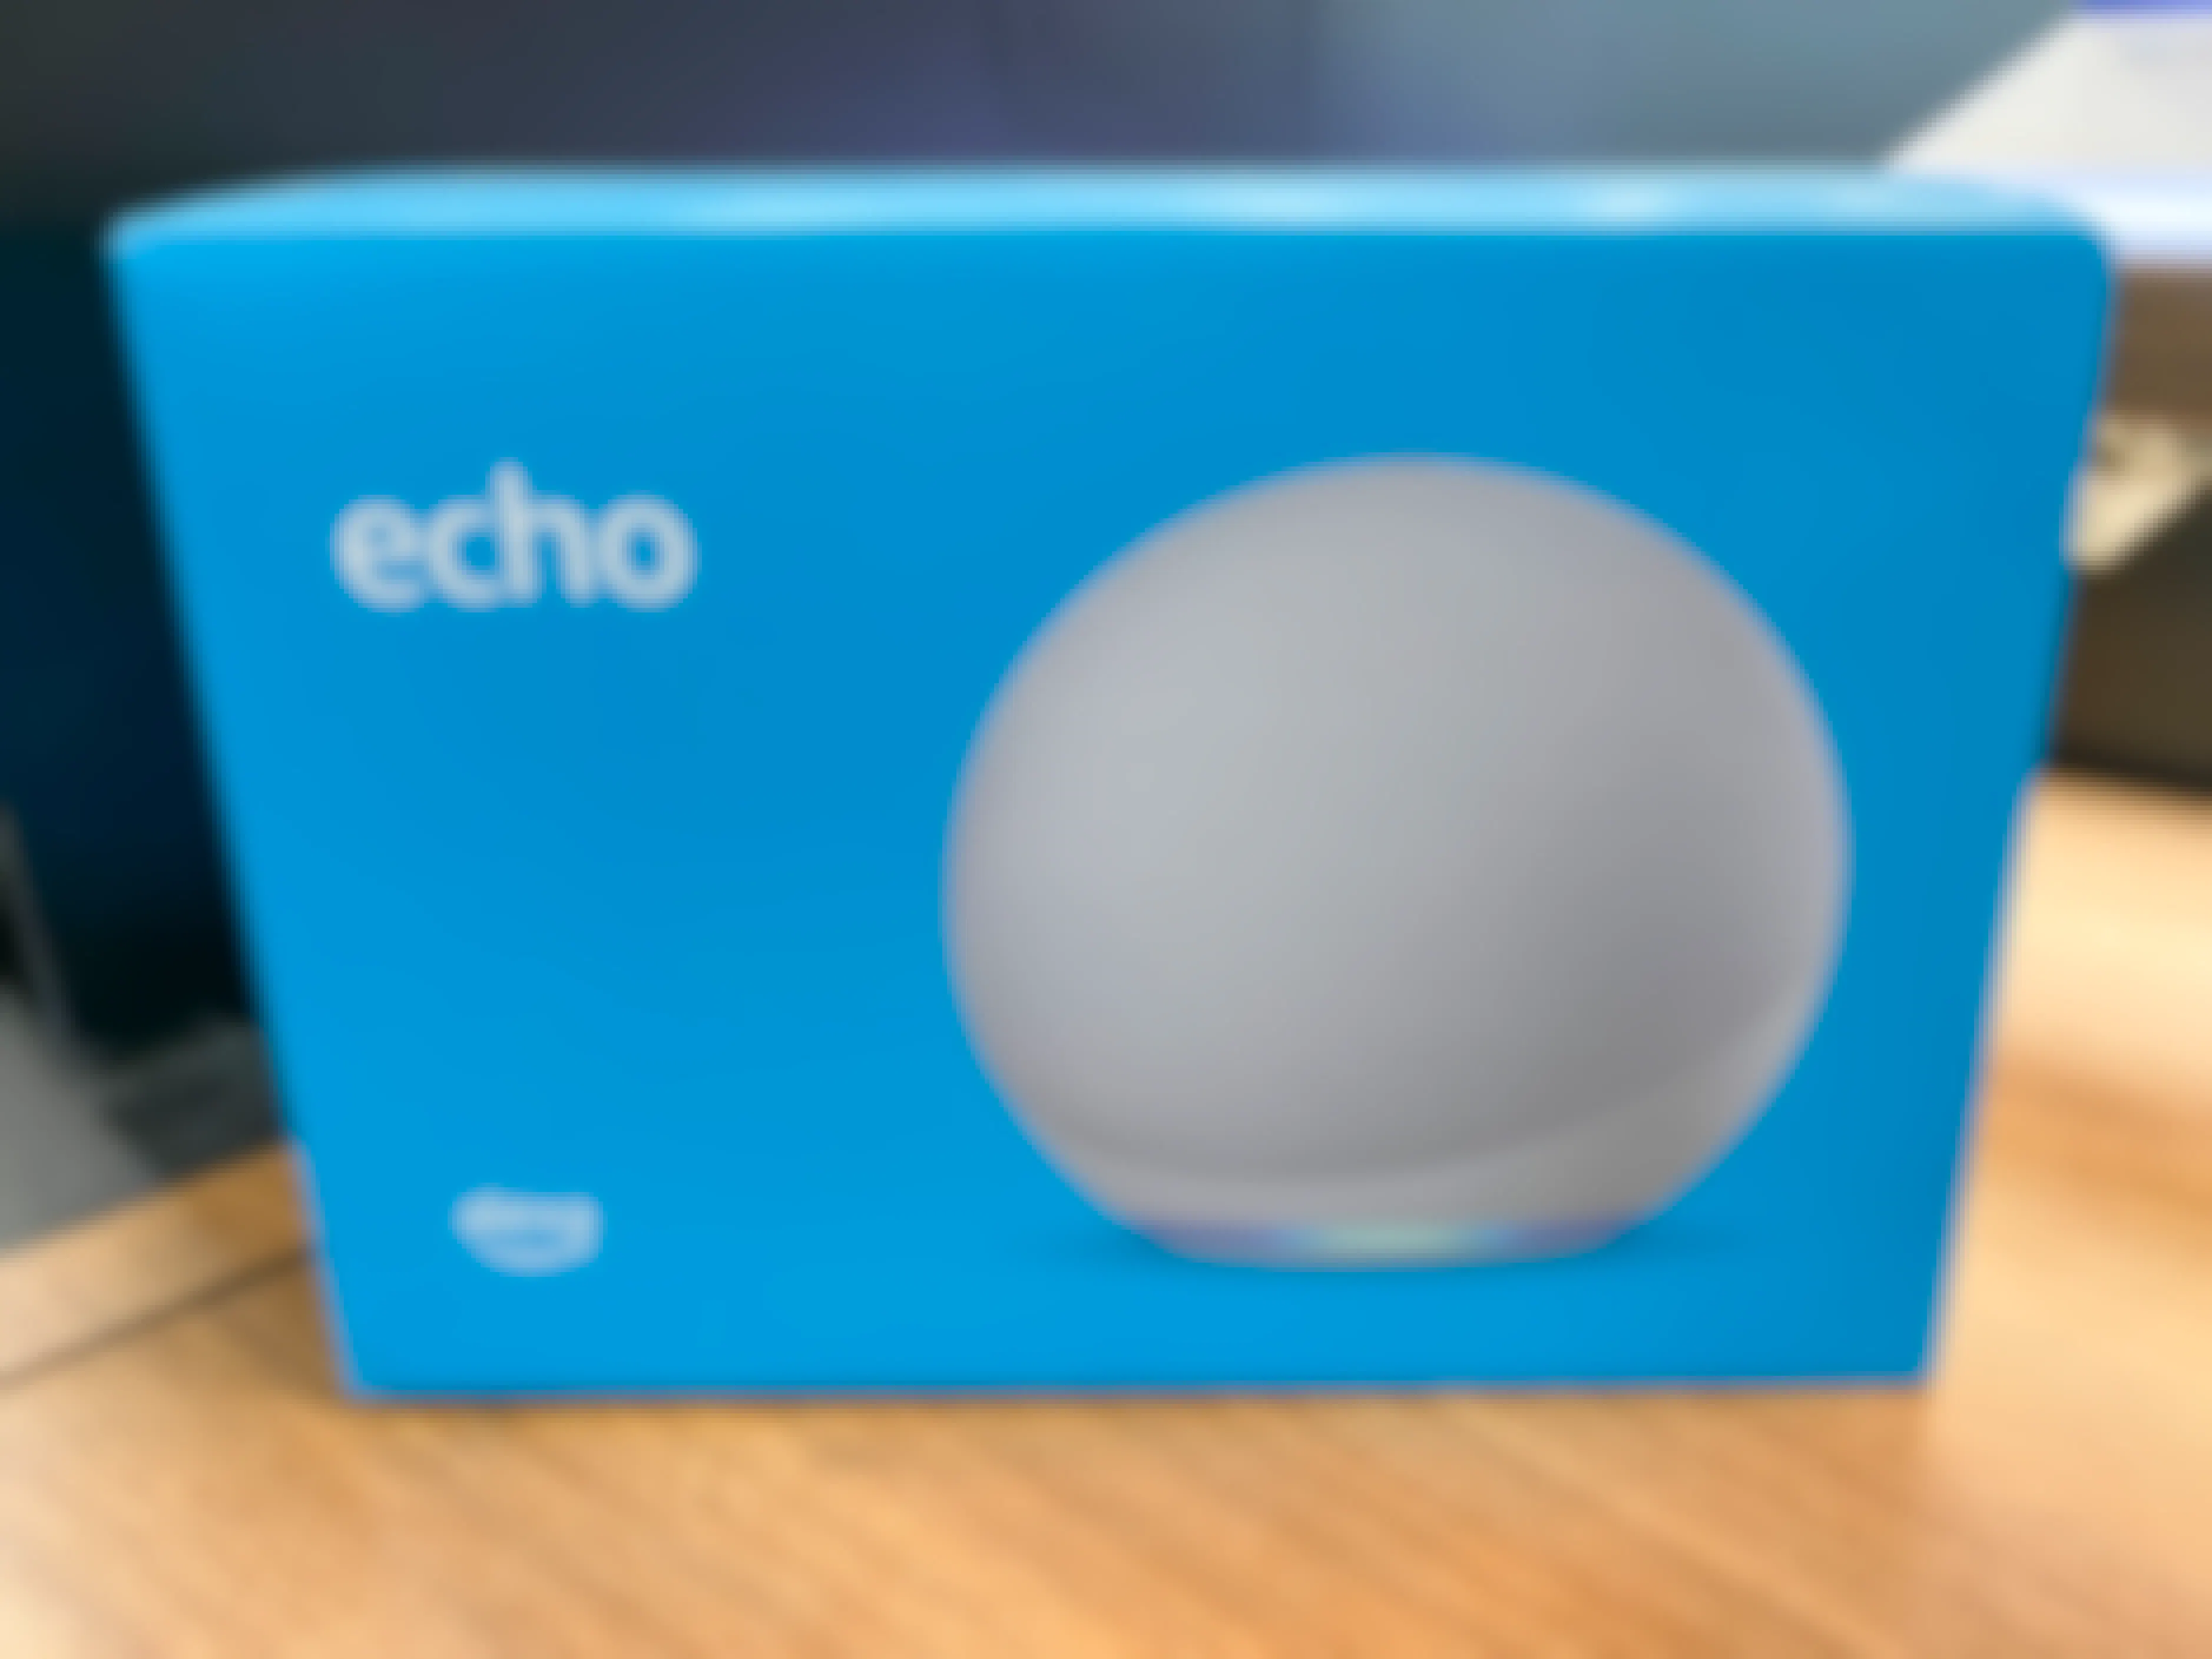 Amazon Echo 4th Gen Premium sound device in its packaging